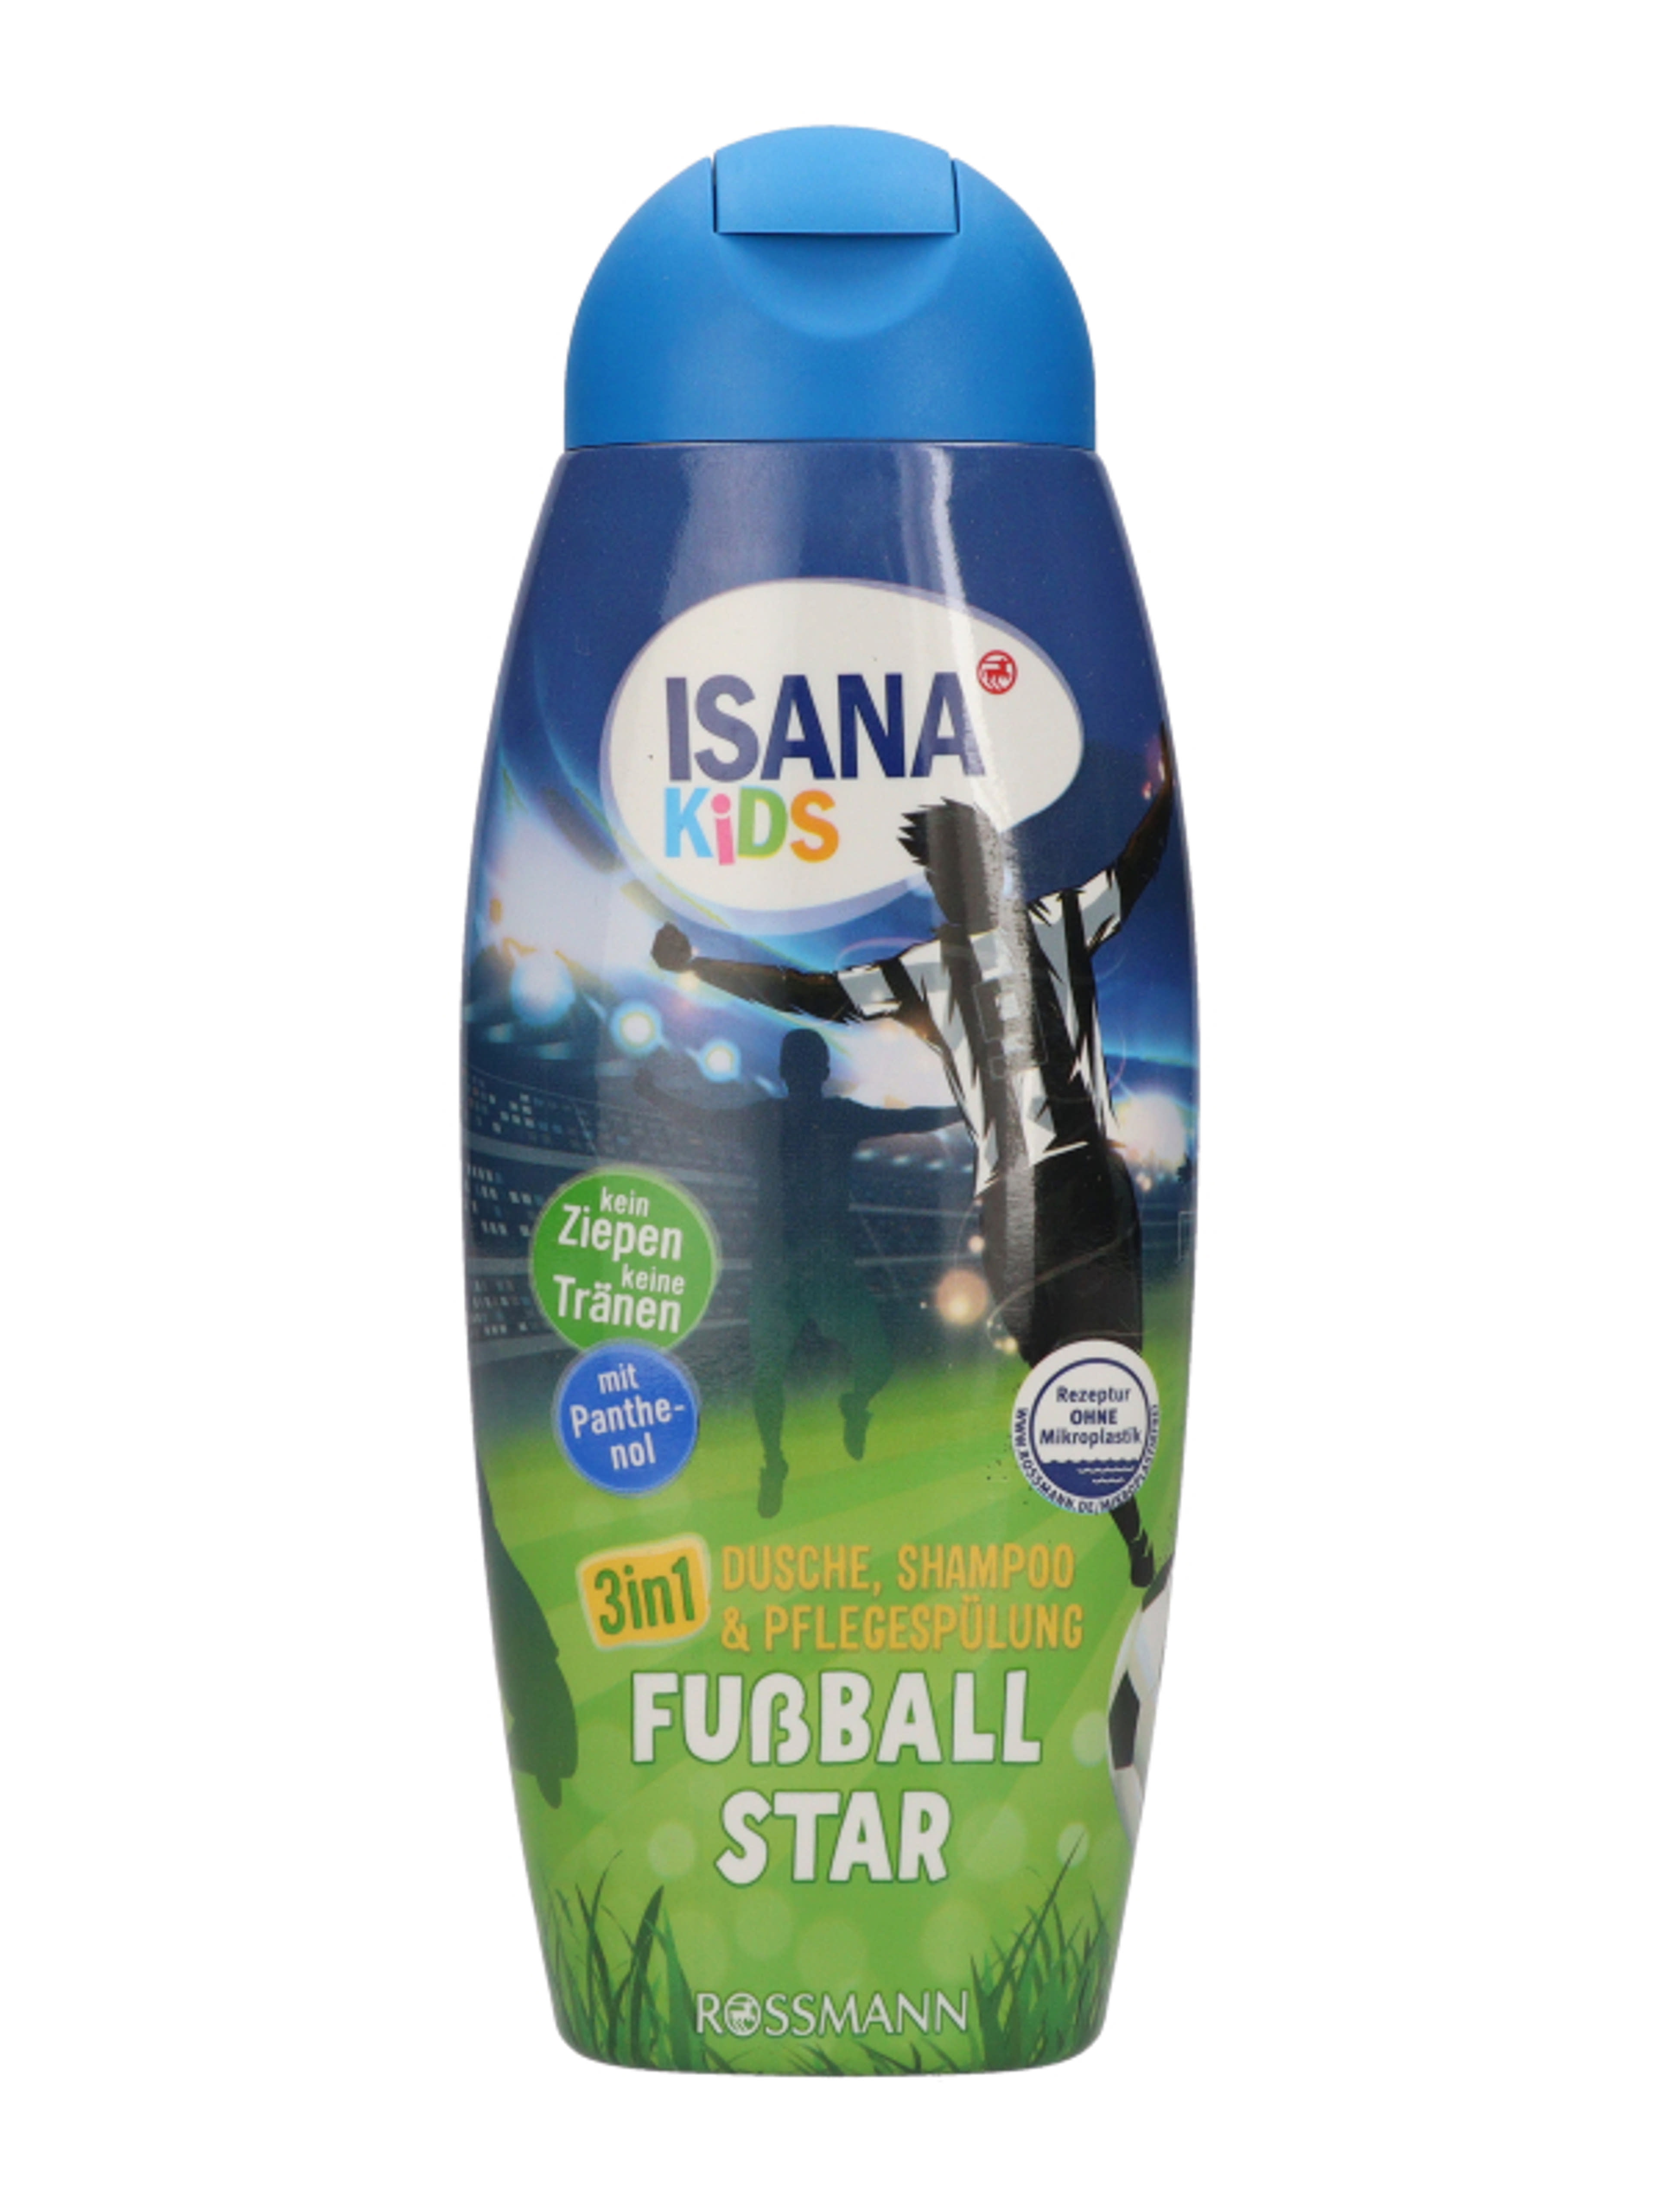 Isana Kids Fussball Star 3in1 tusfürdő, hajsampon&ápoló öblítő fiúknak - 300ml-2